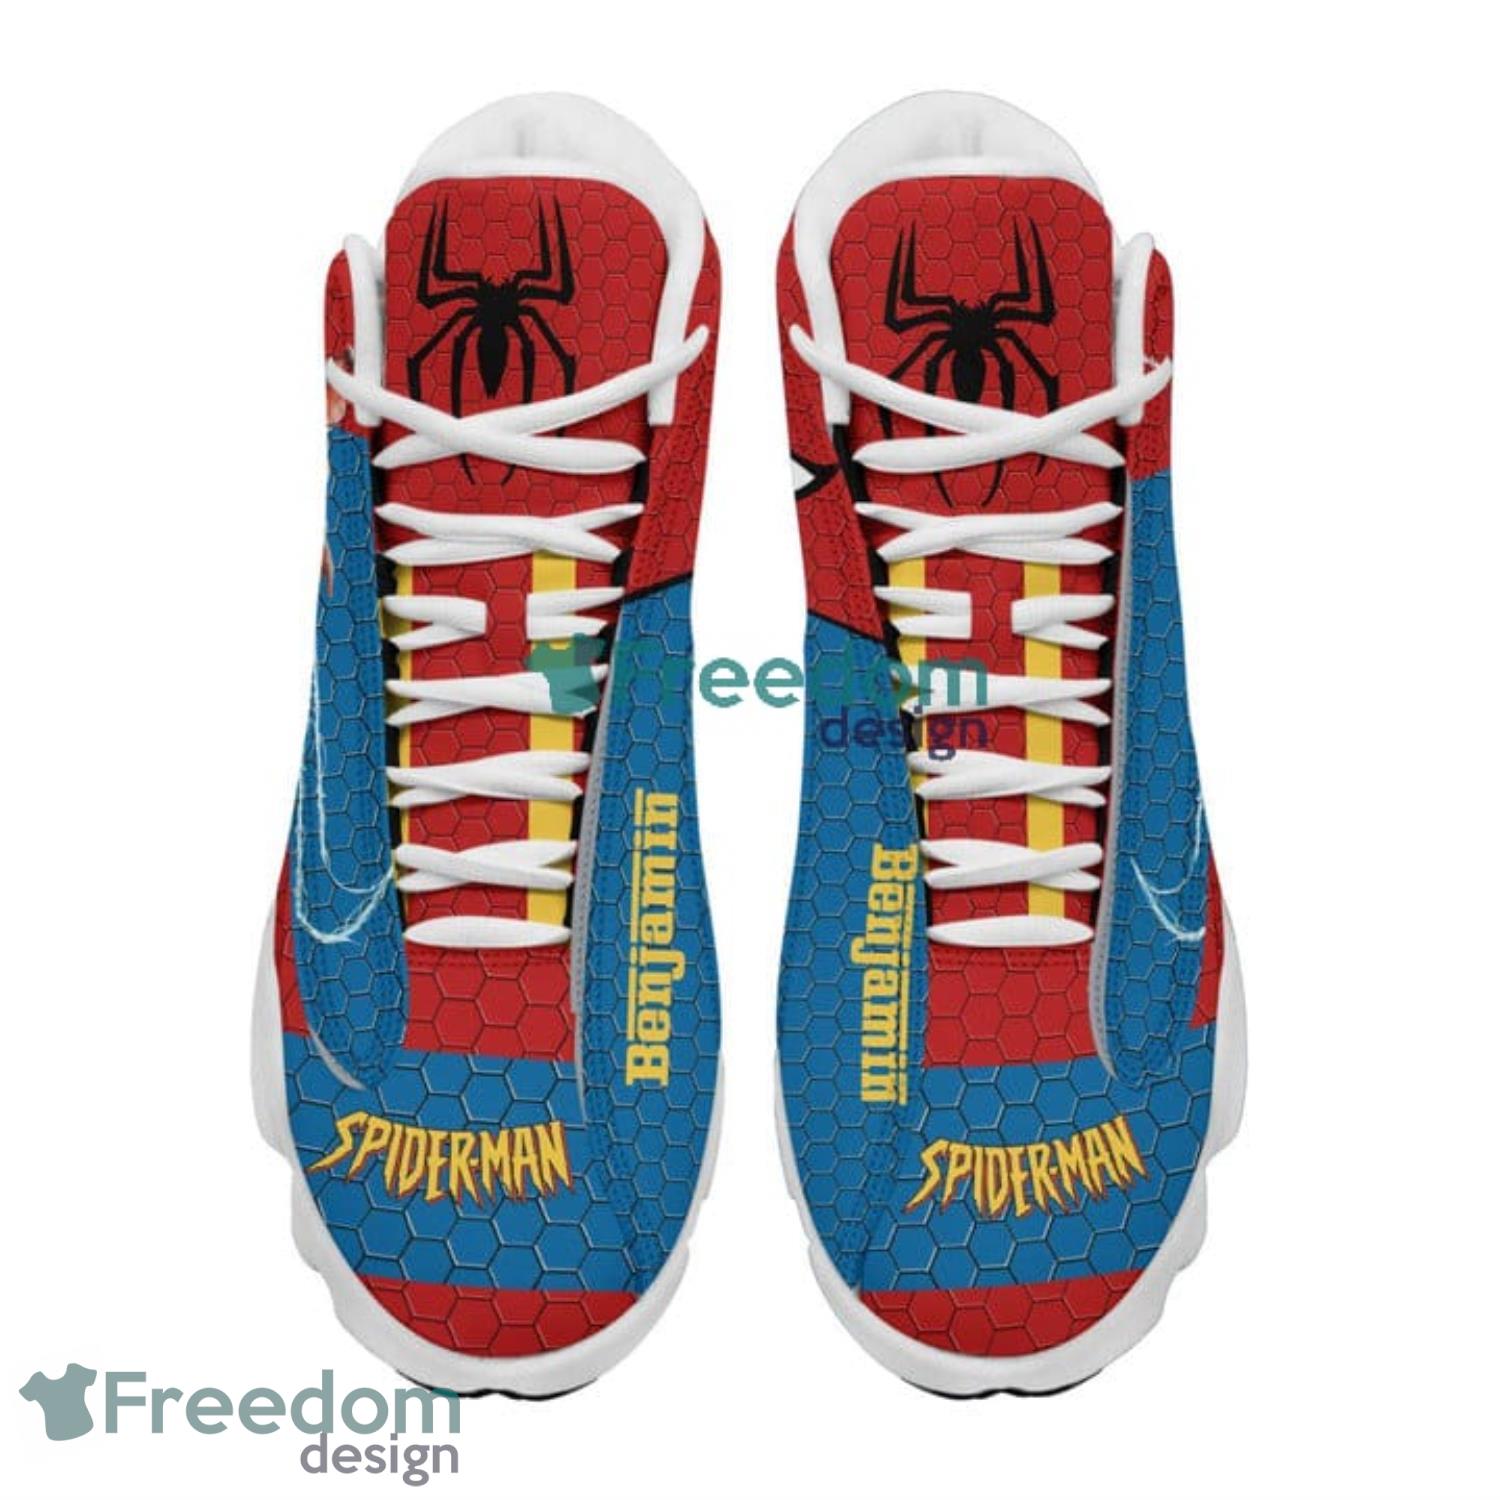 Fire Custom Name Skull Air Jordan 13 Shoes For Men And Women